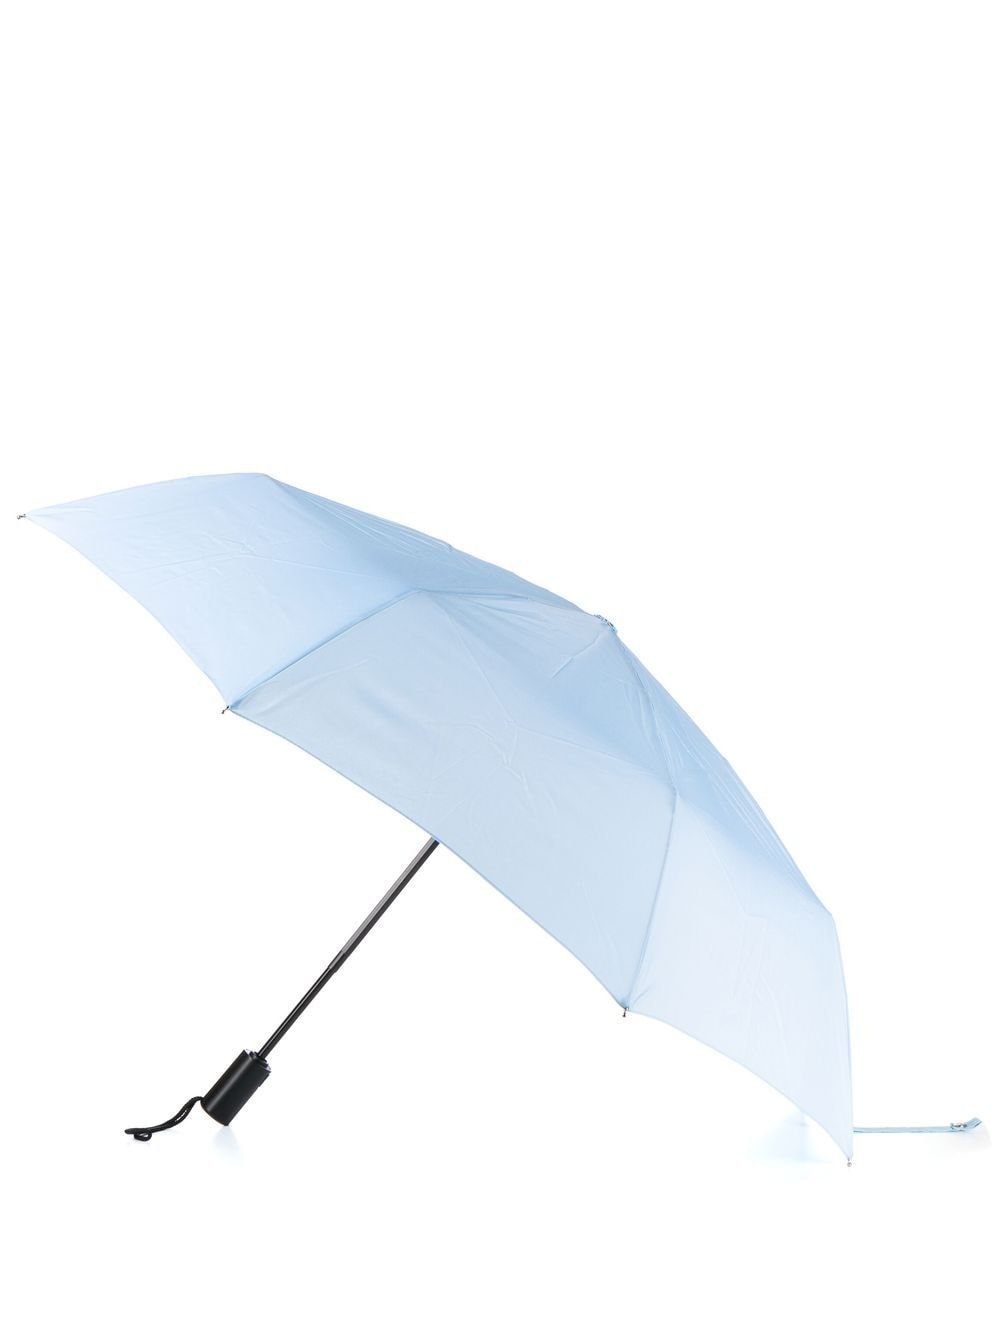 Ayr automatic telescopic umbrella - 3